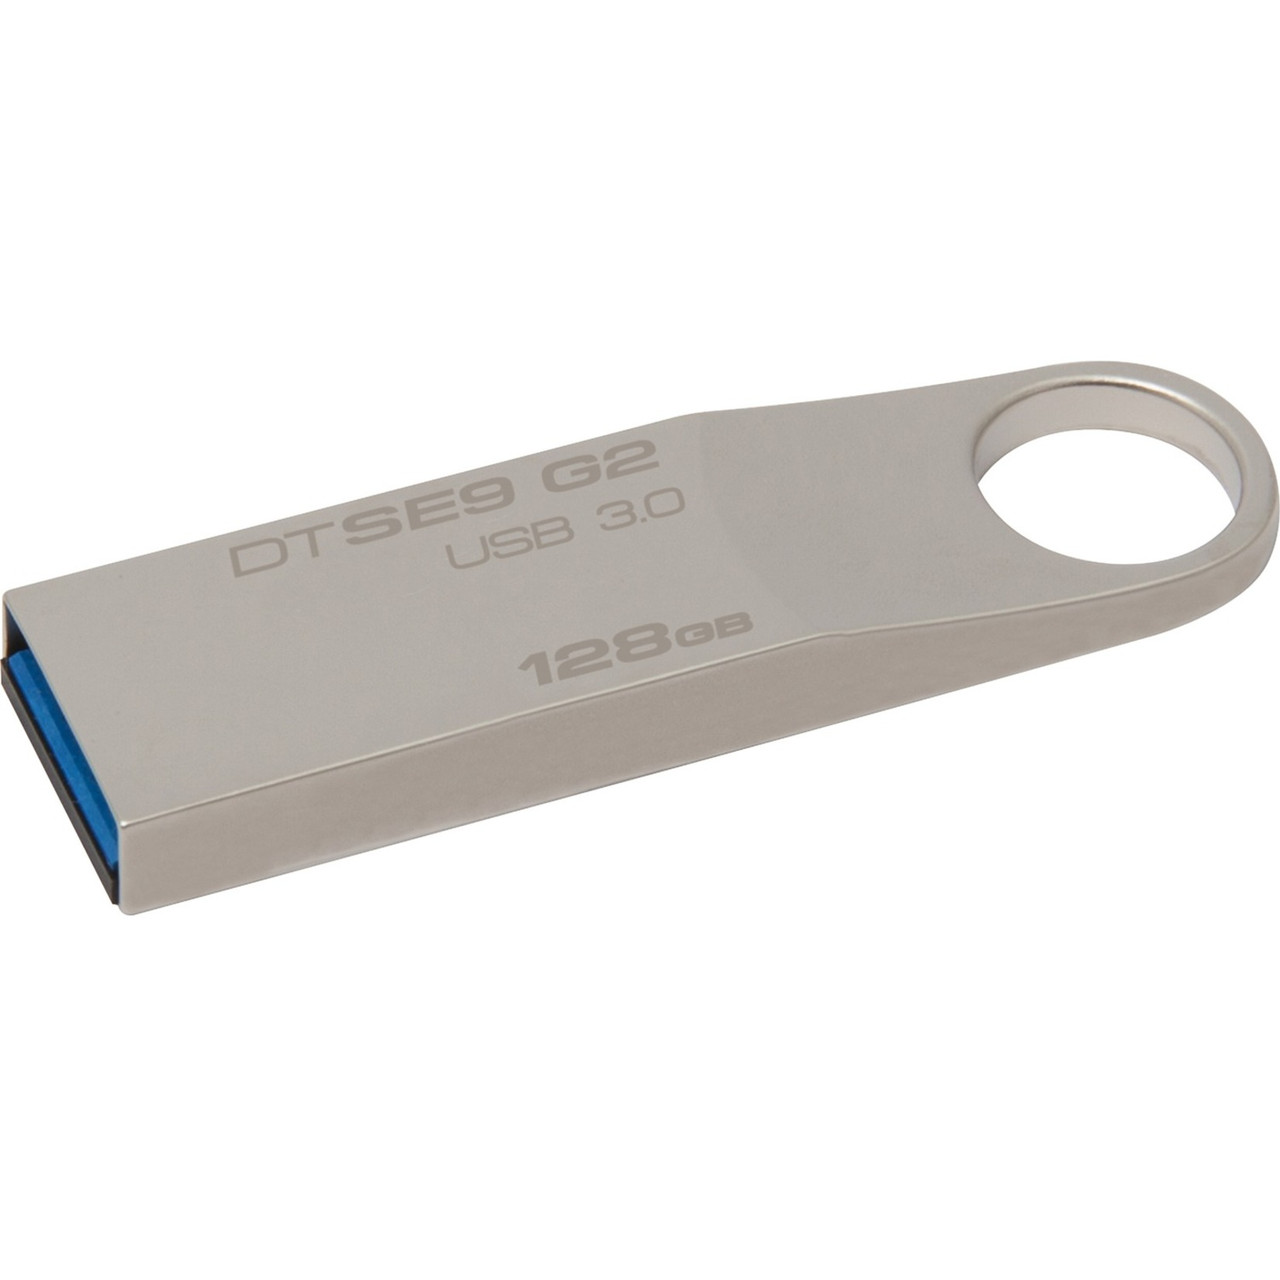 Kingston 128GB DataTraveler SE9 USB 3.0 Flash Drive - DTSE9G2/128GBCL